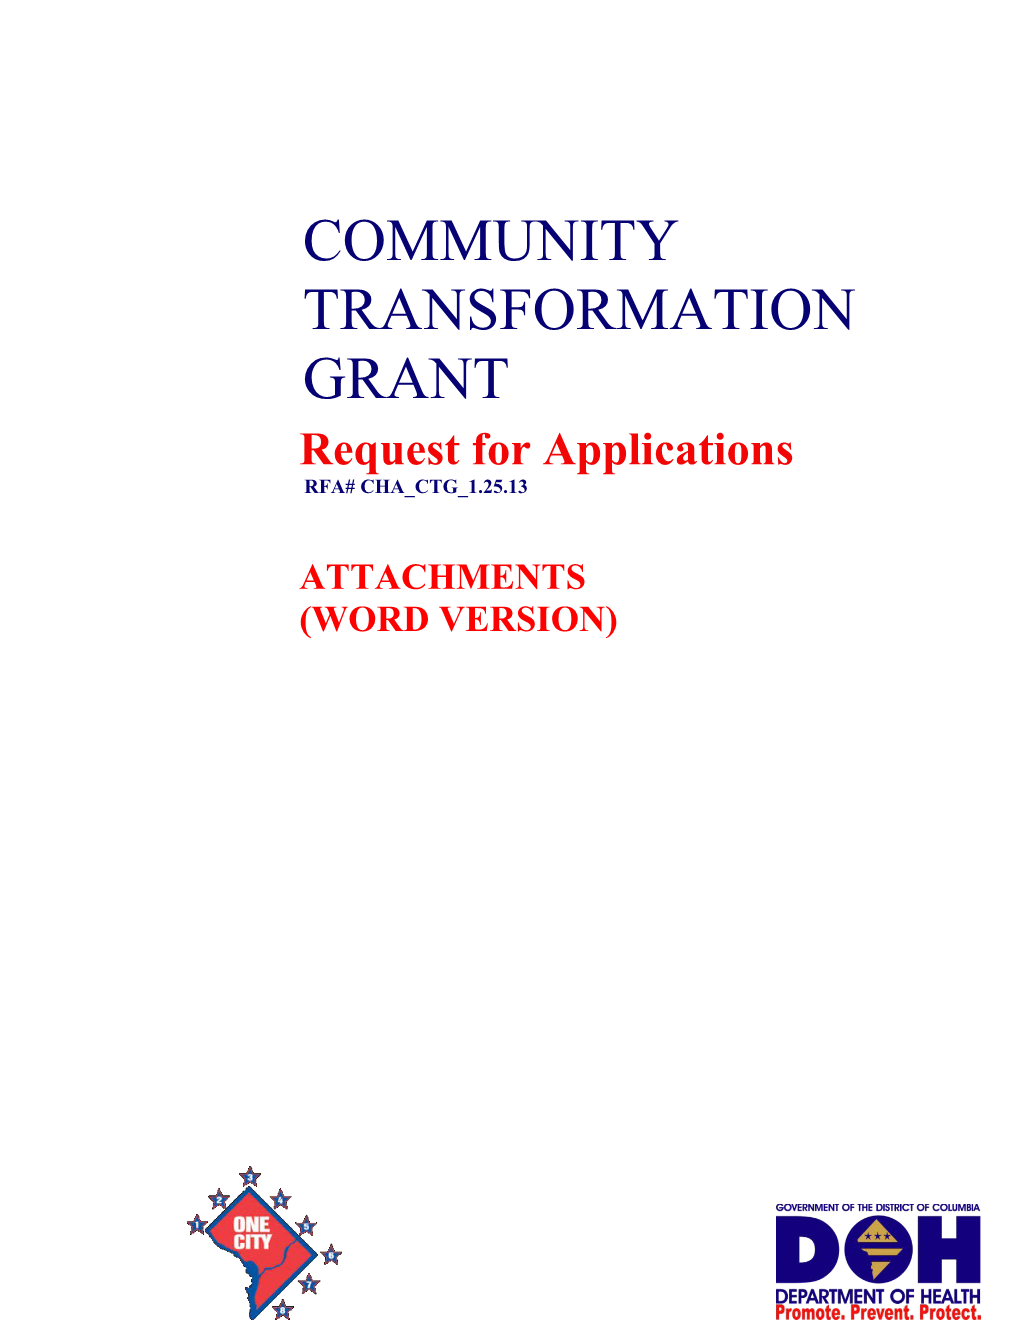 Community Transformation Grant